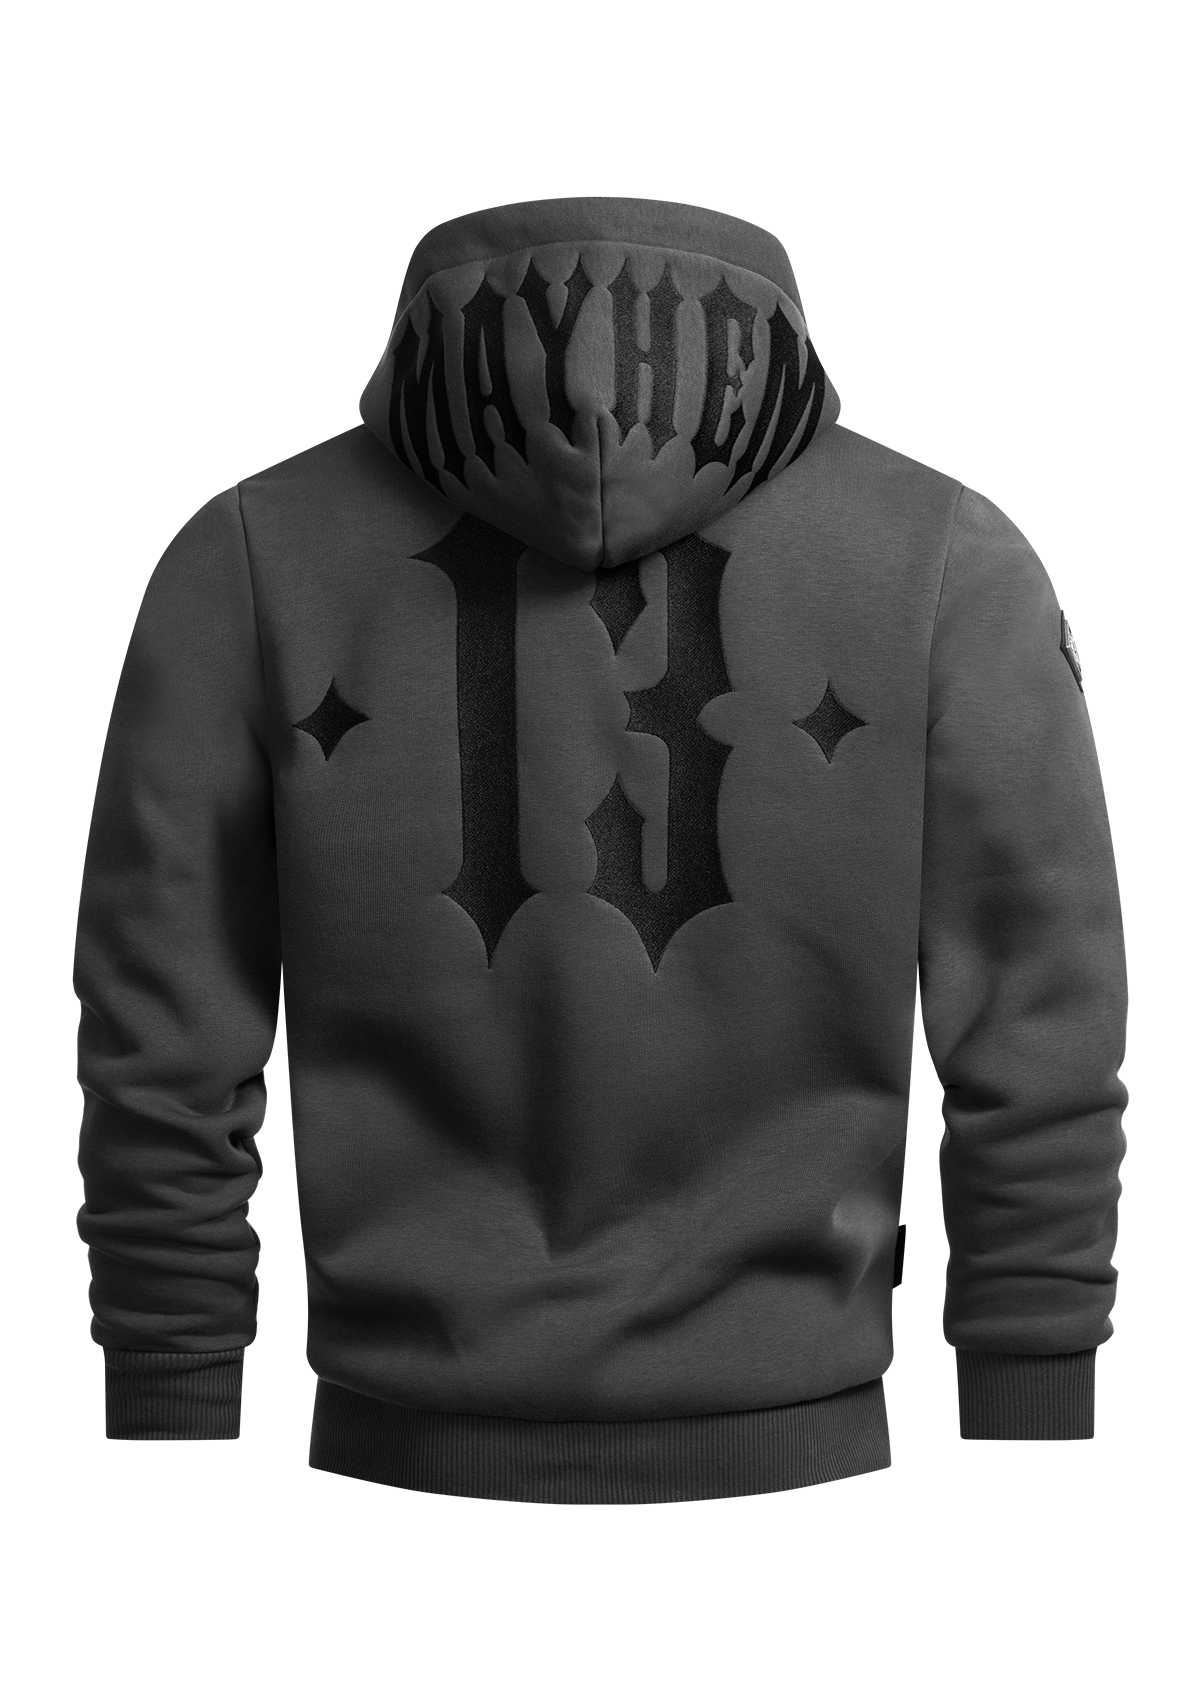 Hoody jacket Mayhem Classic A/S MK3